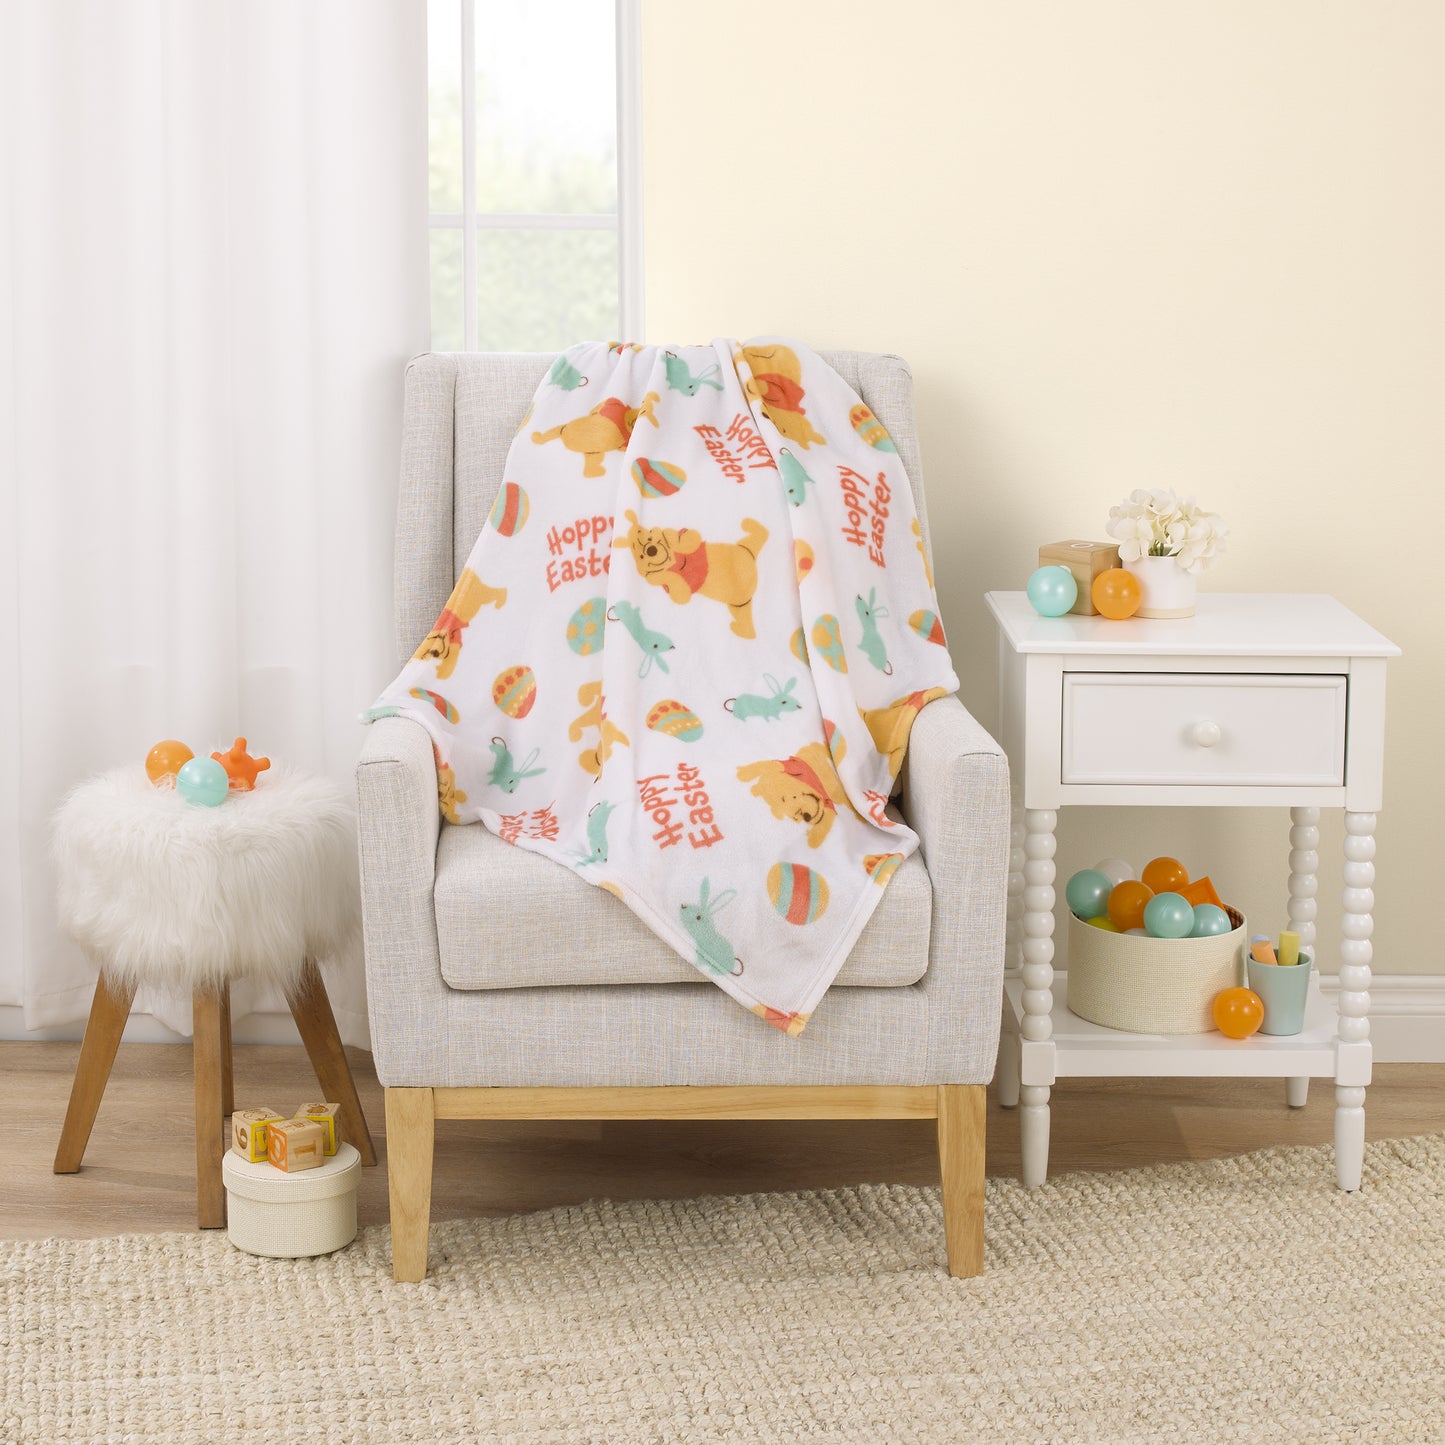 Disney Winnie the Pooh Aqua, Tan, Red, and White Hoppy Easter Super Soft Plush Baby Blanket